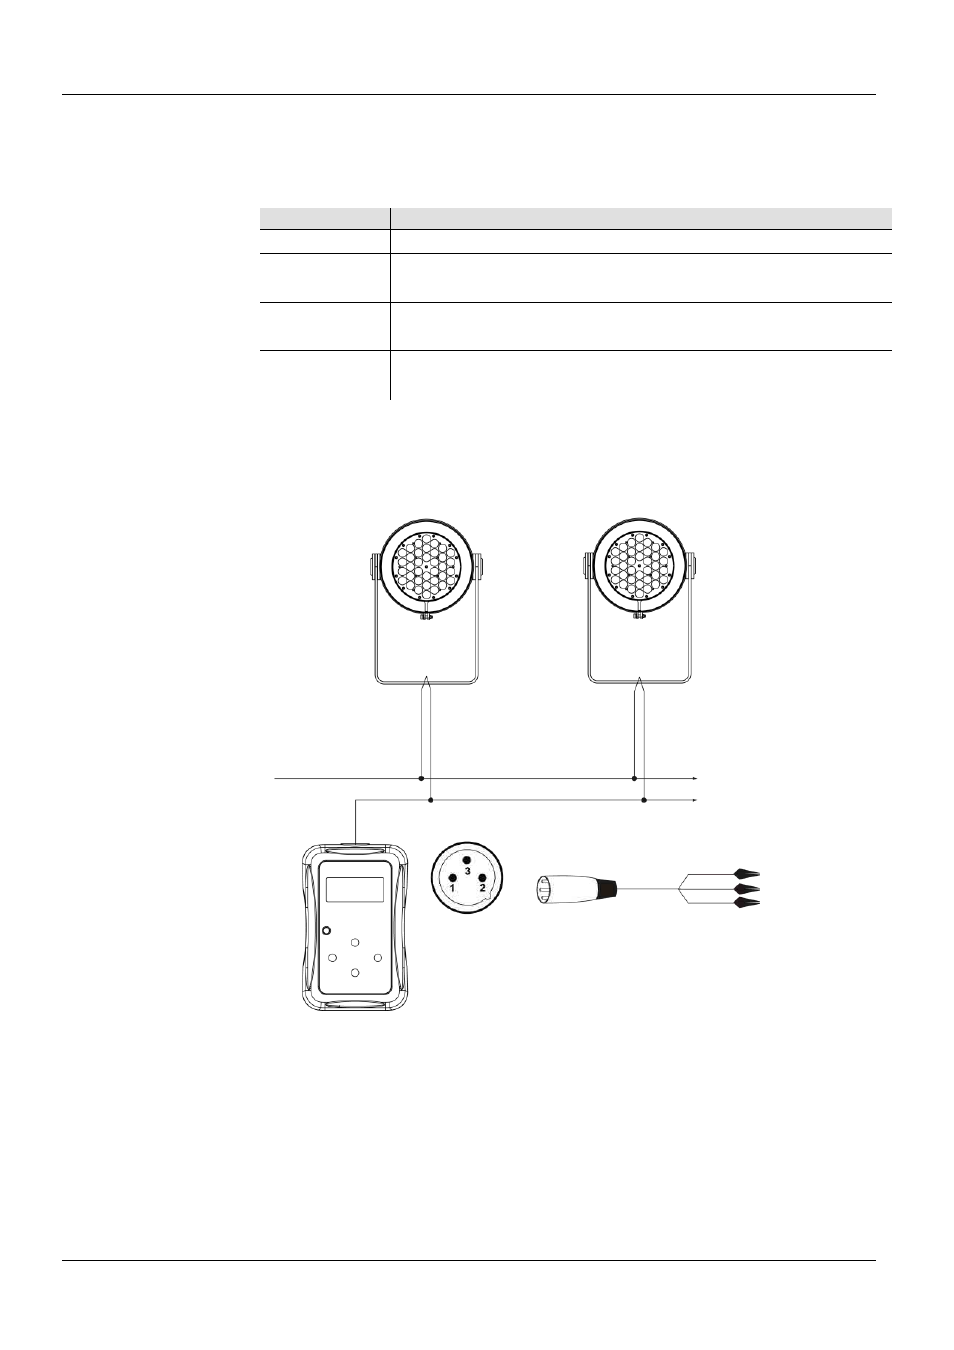 Ilumicon and dmx controllers, Ilumicode control panel description, Ilumicode connections | Ilumicode connection diagram | ILUMINARC Ilumipod™ 36g2 IP User Manual | Page 5 / 28